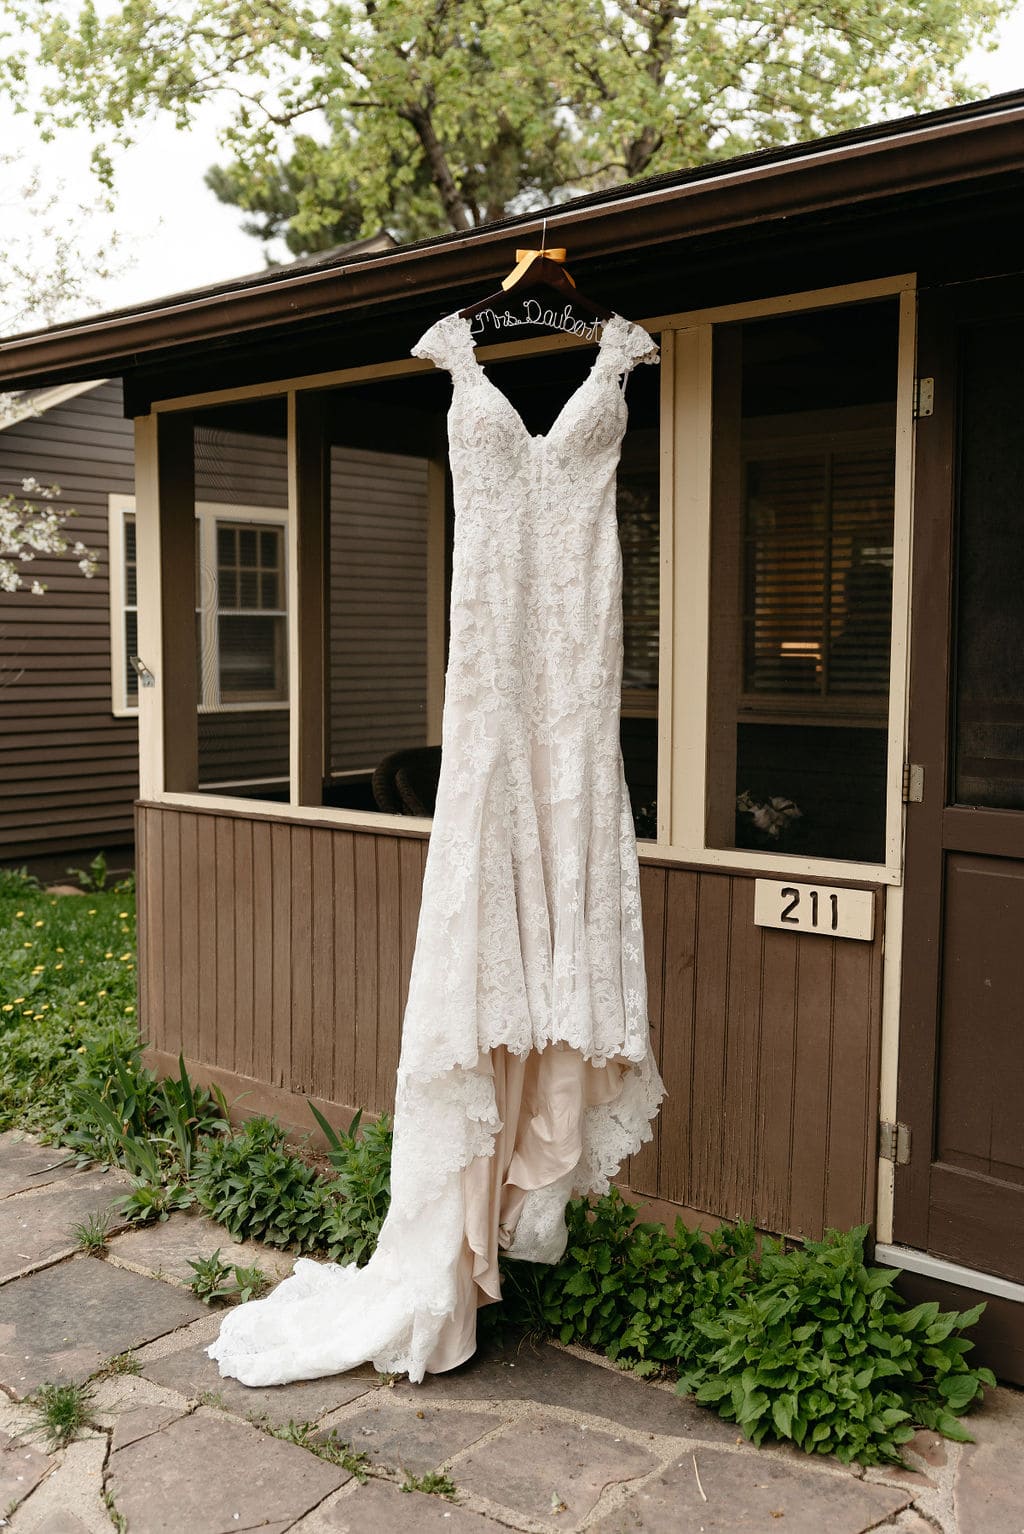 Dress Hanging on Cabin at Chautauqua Park